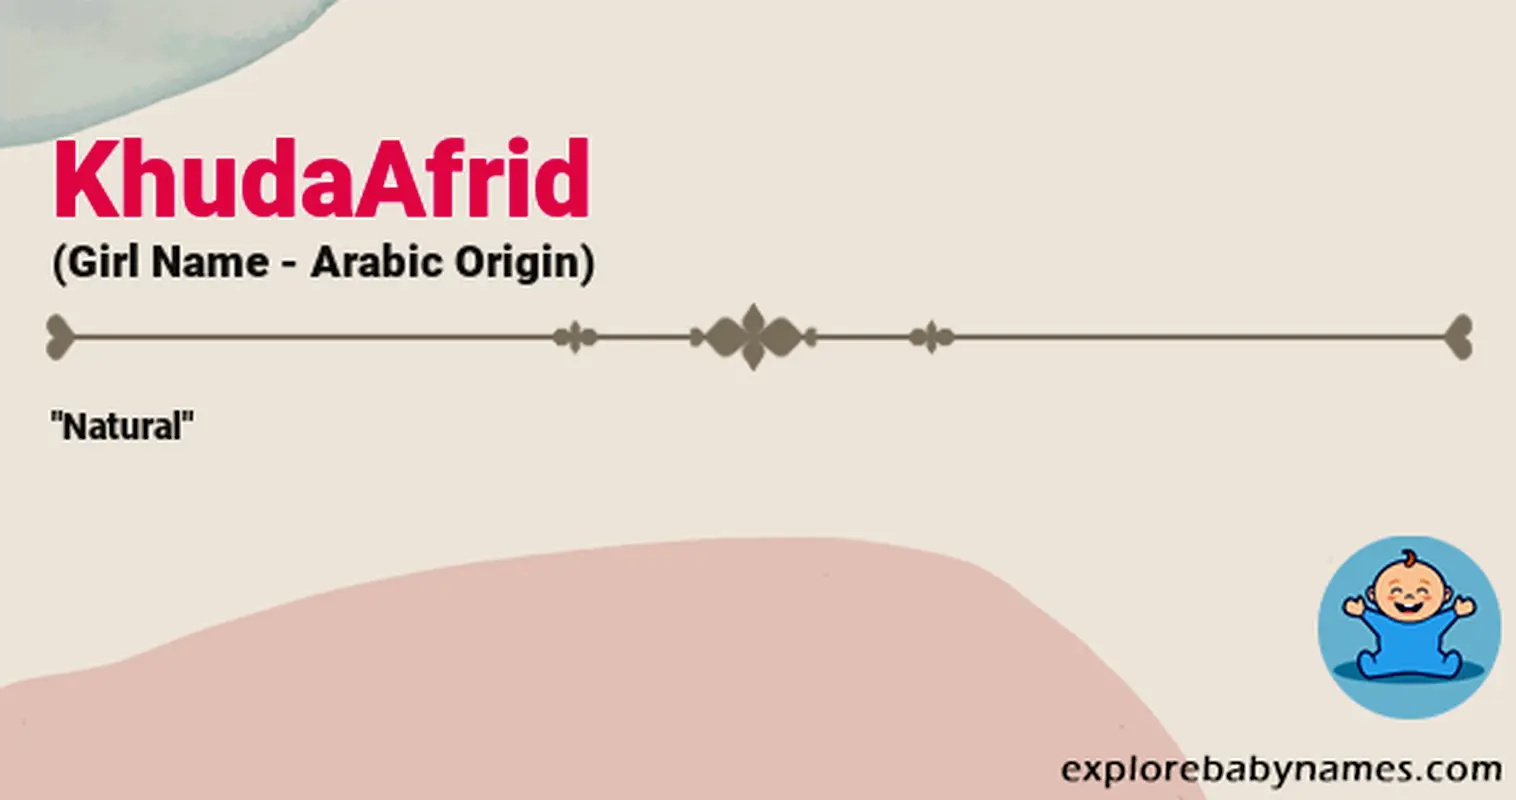 Meaning of KhudaAfrid